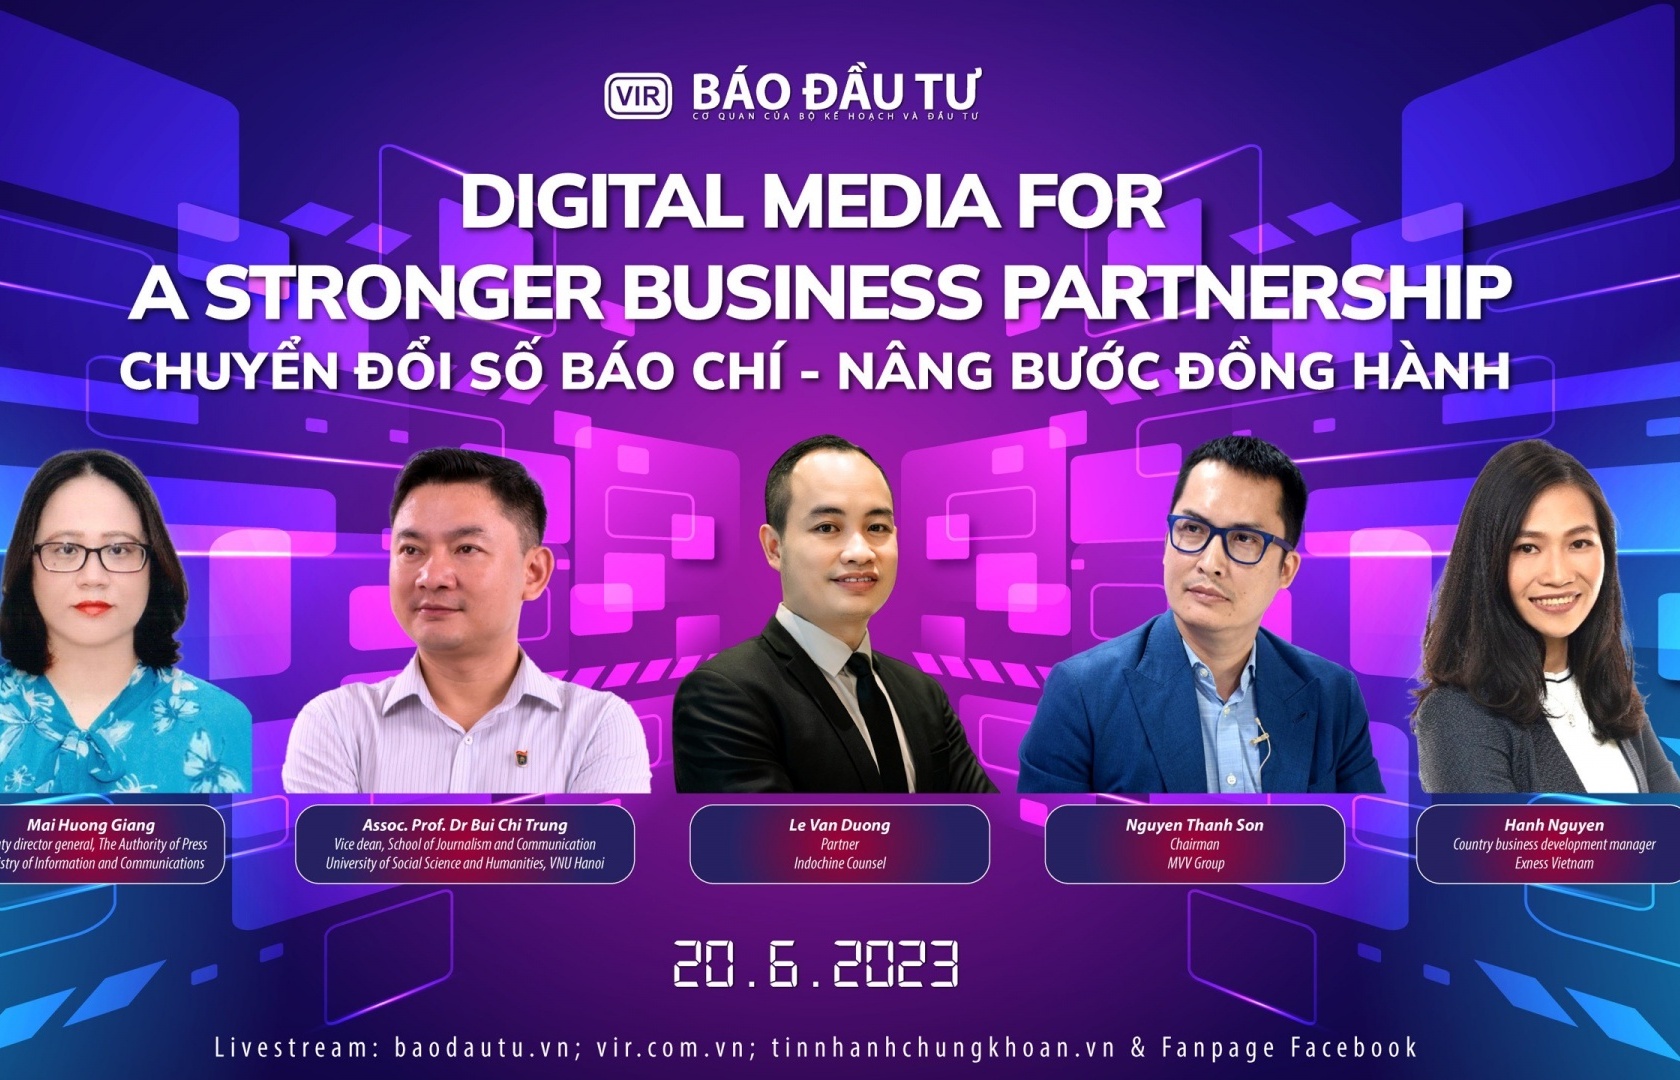 VIR to host Digital Media for a Stronger Business Partnership talk show